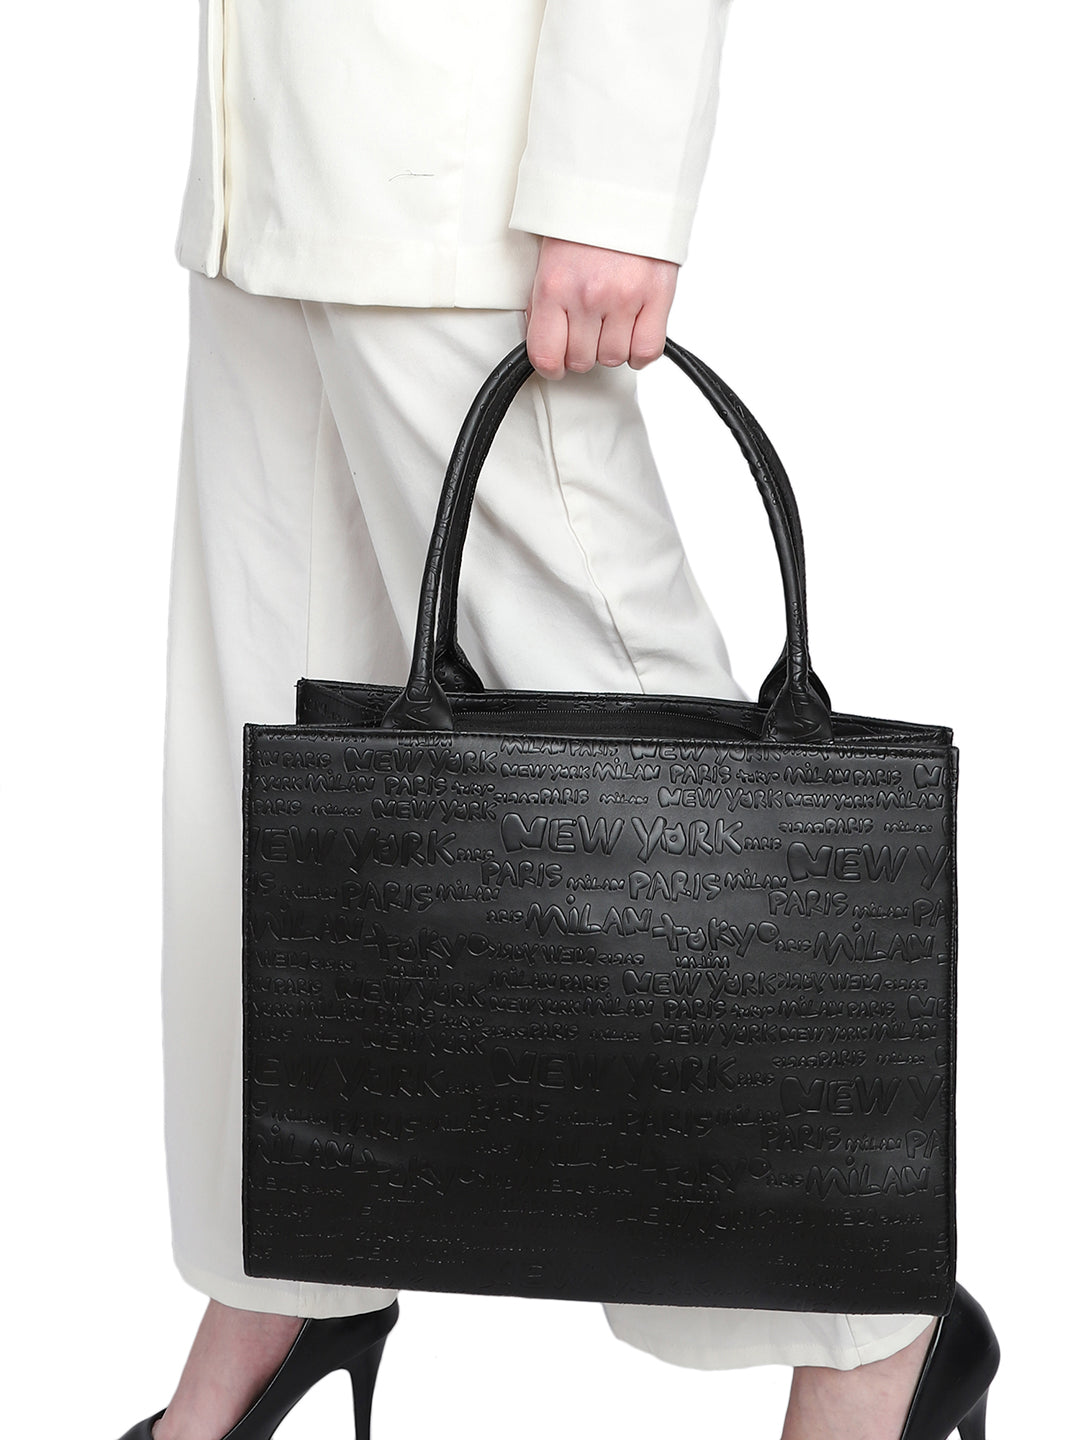 MINI WESST Women's Black Tote Bag